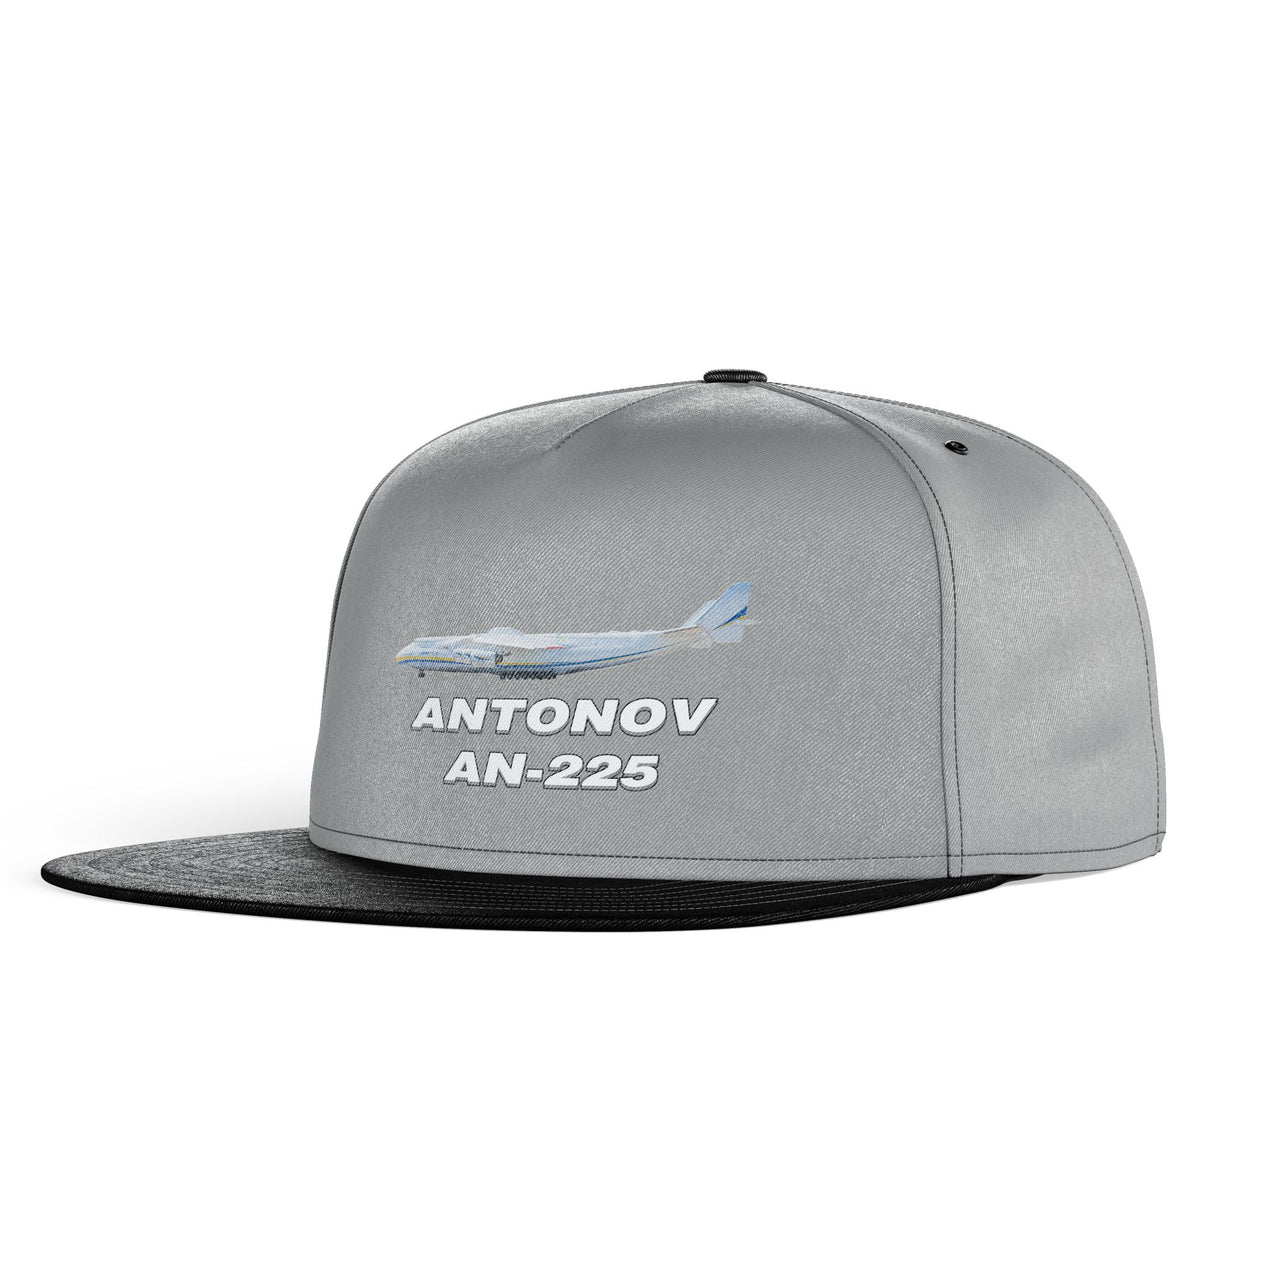 The Antonov AN-225 Designed Snapback Caps & Hats